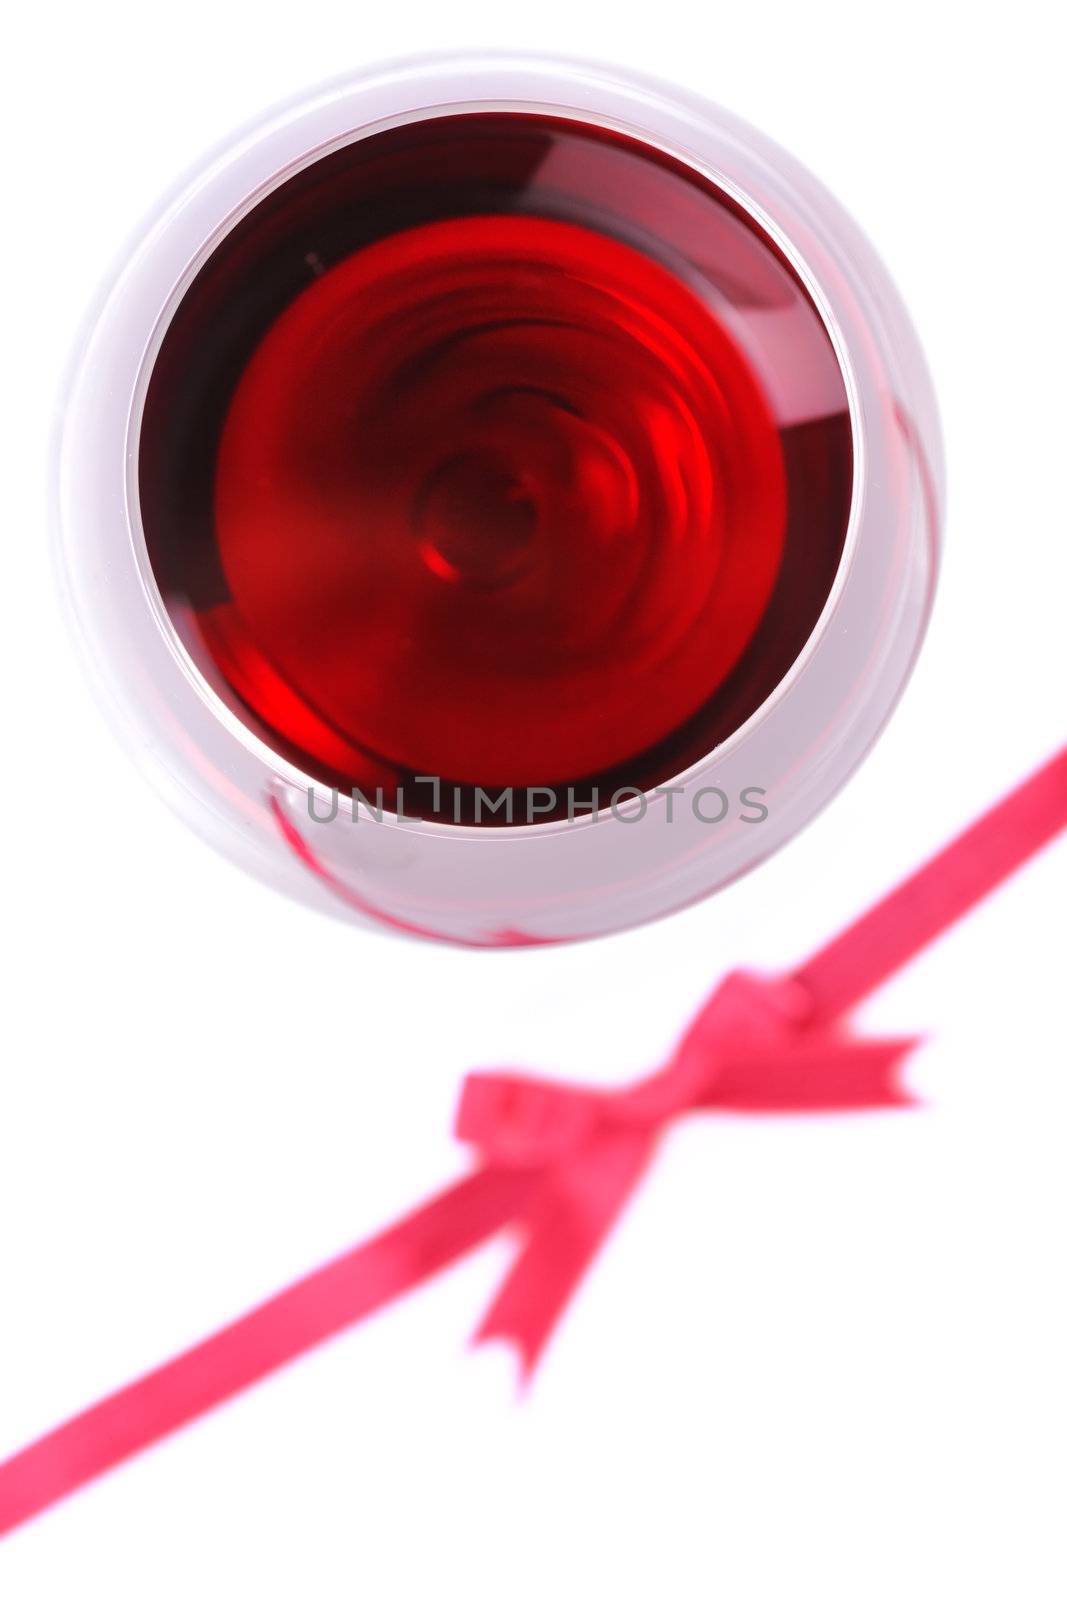 red wine glass by kokimk